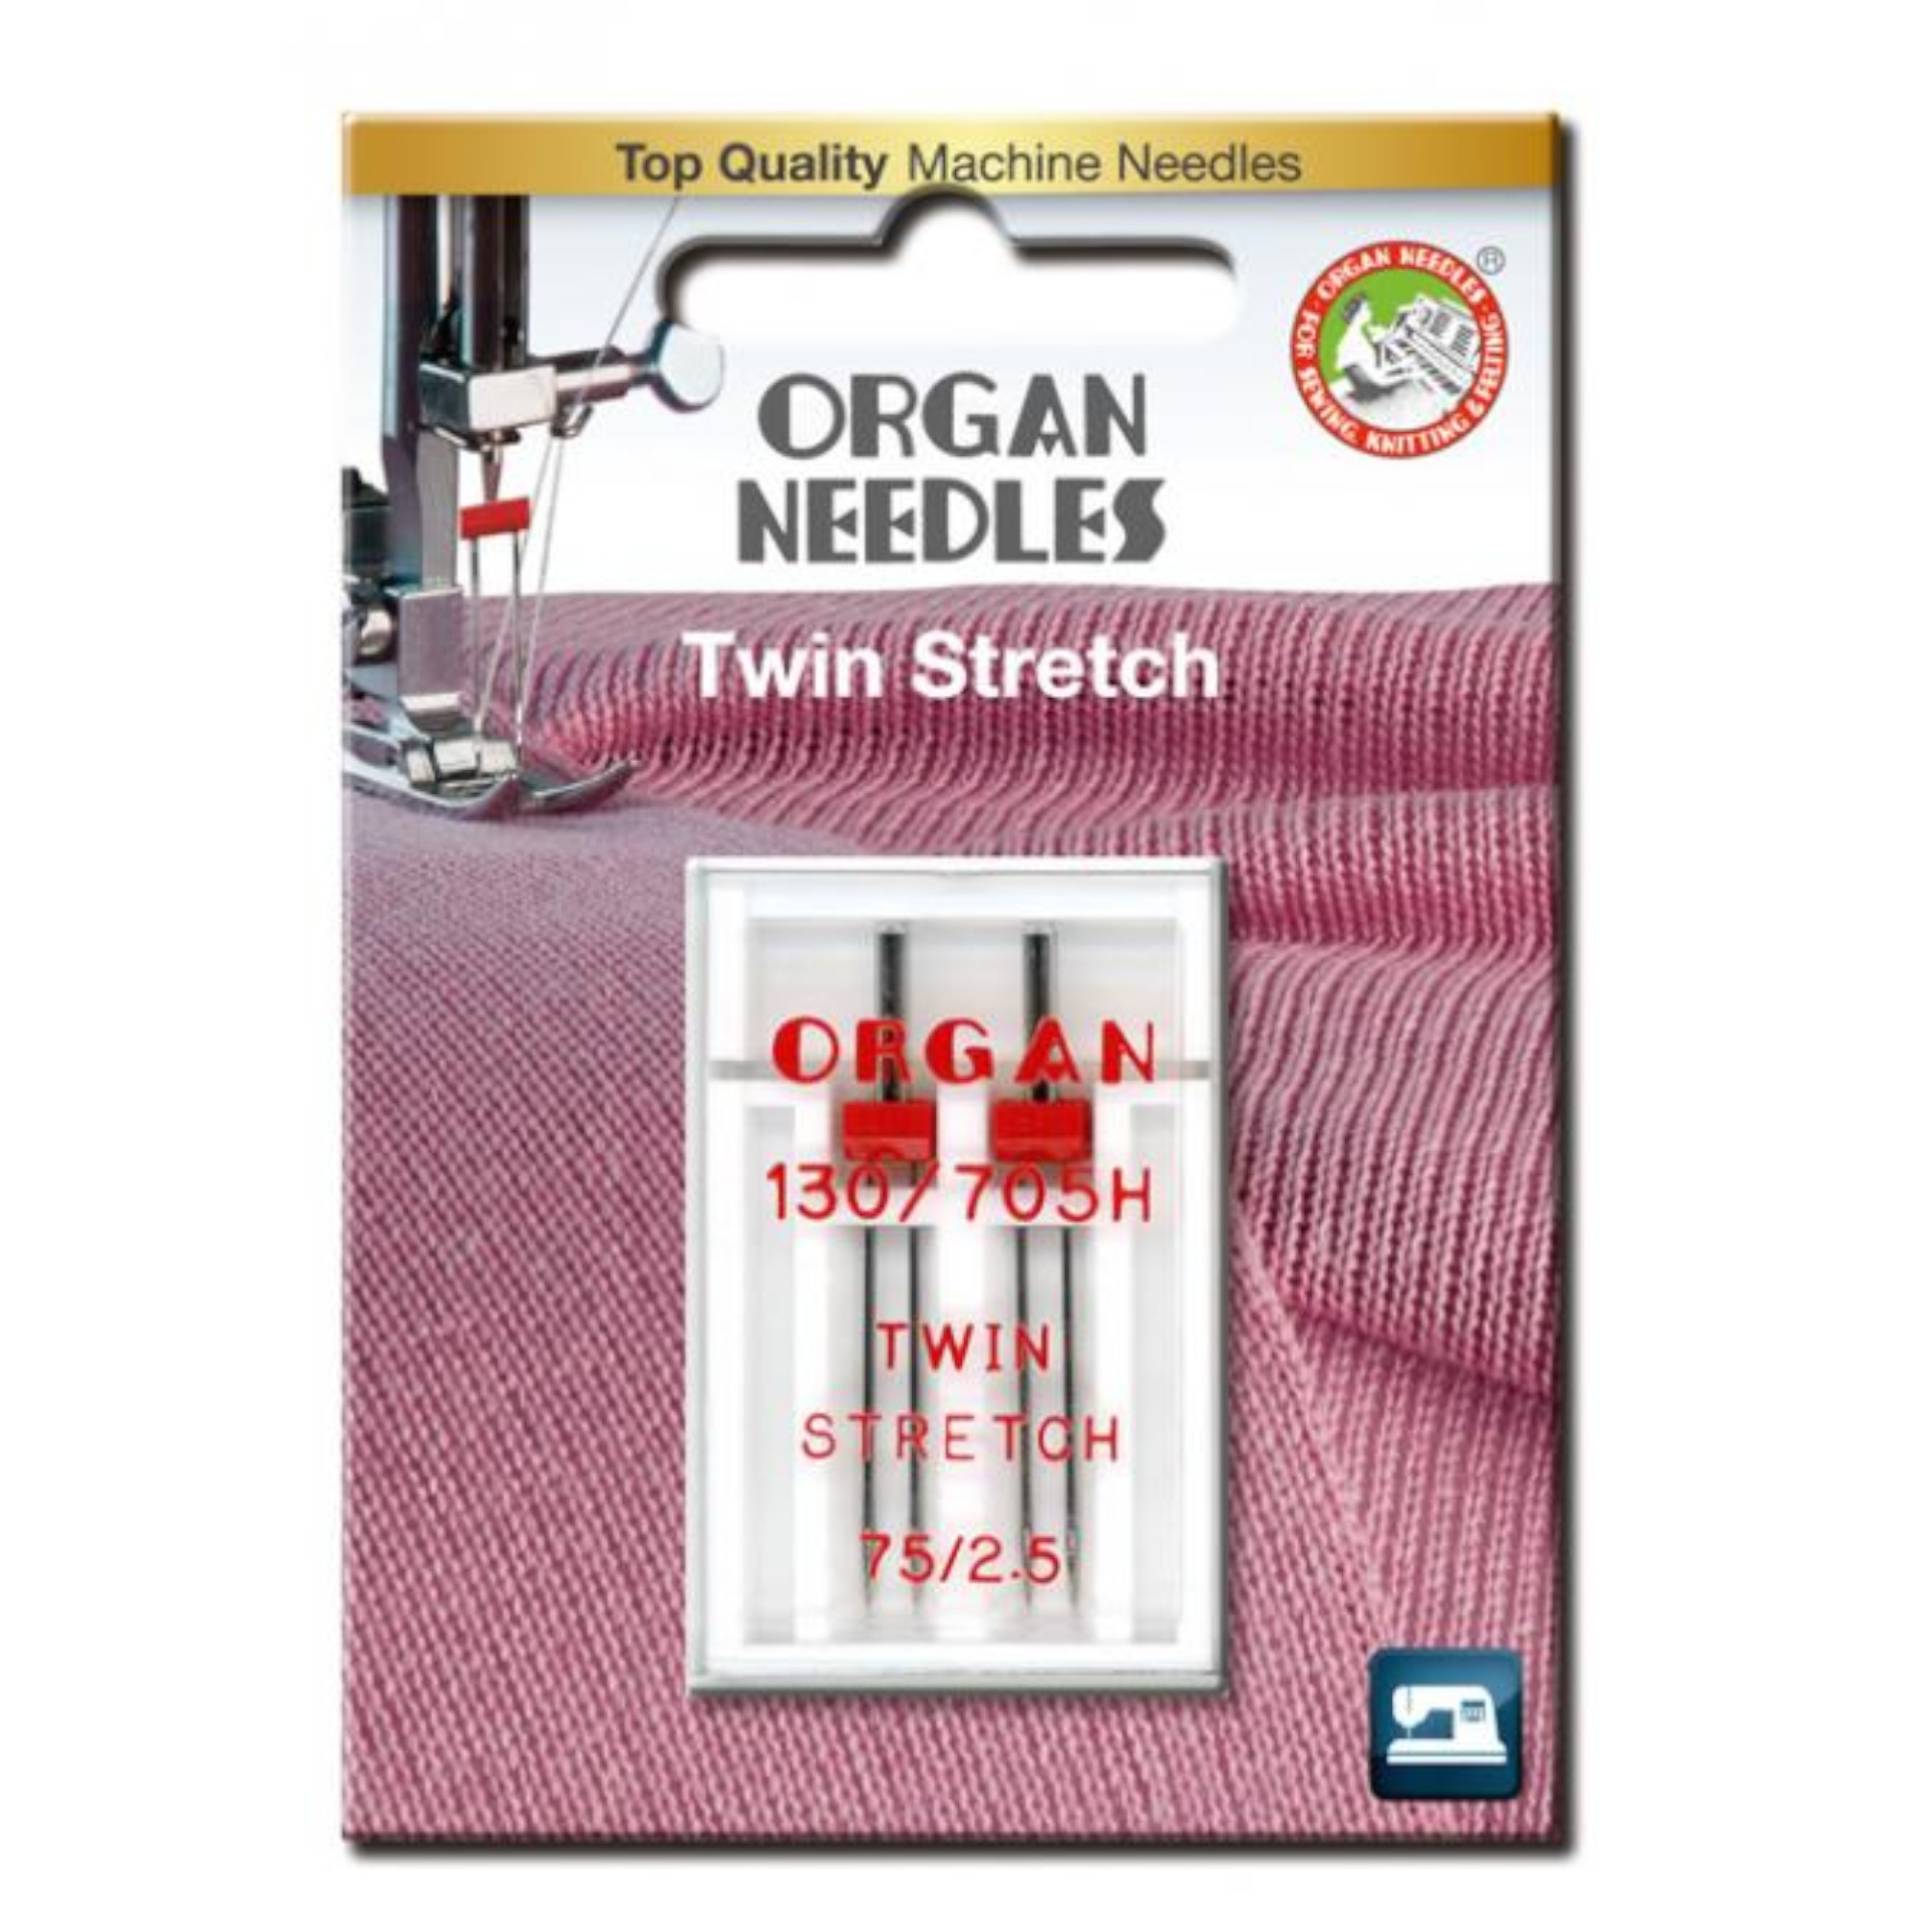 Organ Doppelnadel / Zwillingsnadel 130/705, Stretch 75/2,5 mm von Stoffe Hemmers